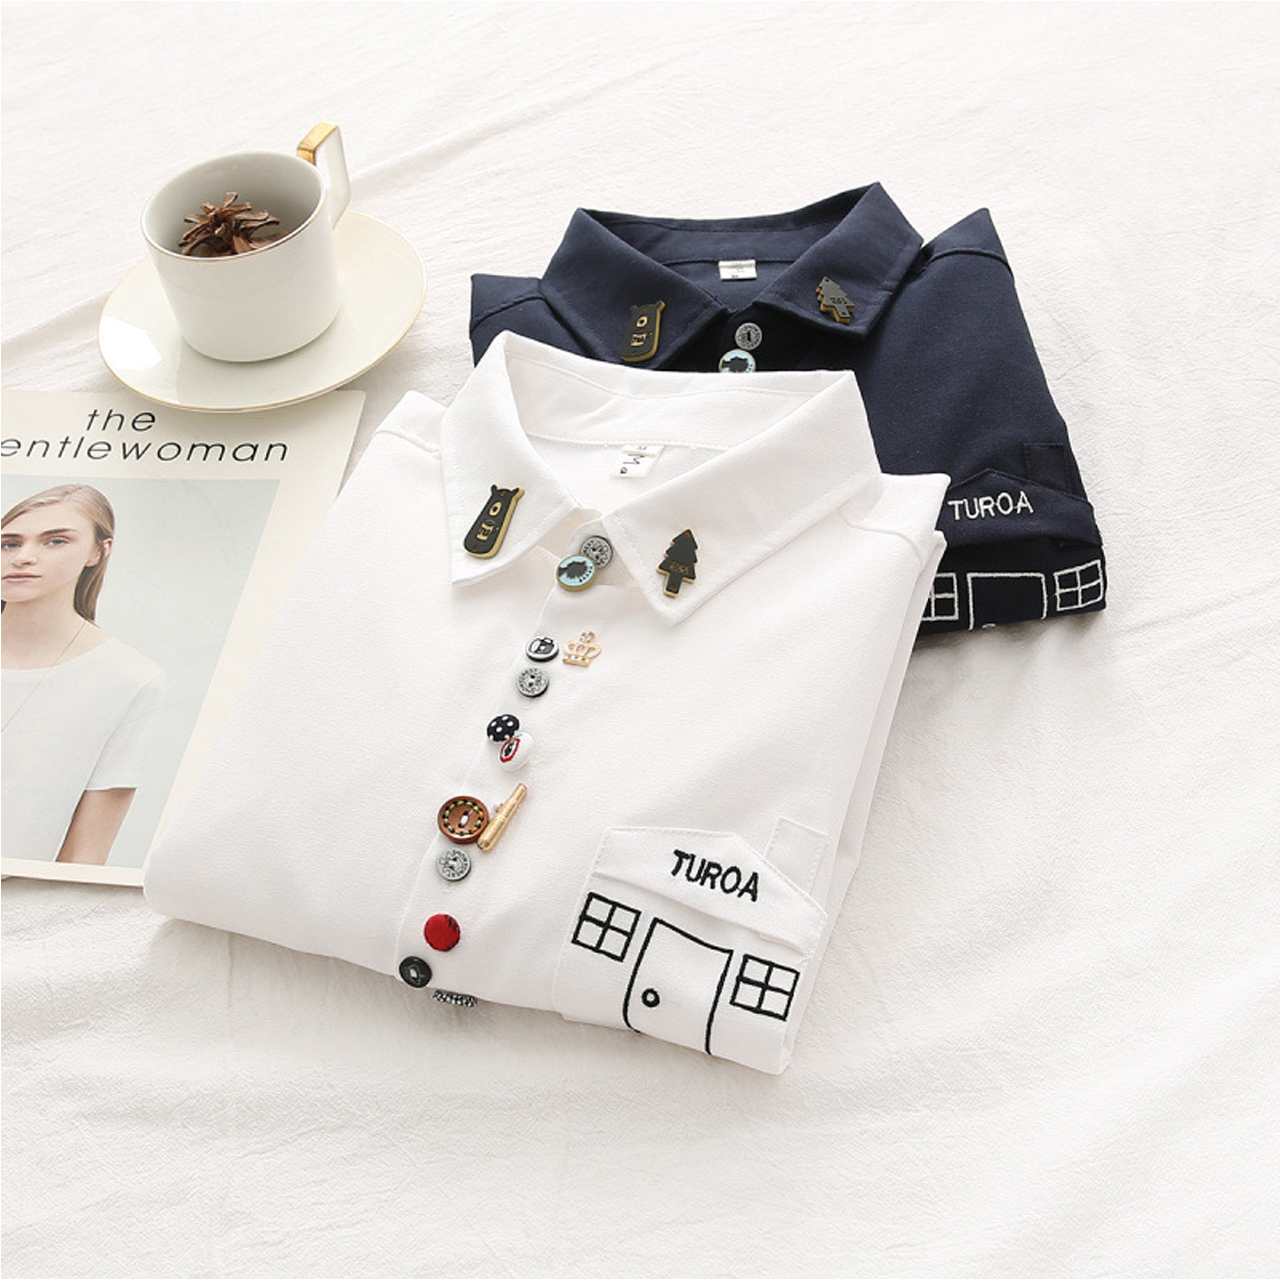 Regit Adornment Button Shirts White 韓国ファッション 森ガール おしゃれ シャツ 白シャツ かわいいシャツ ユニーク 個性的なファッション Regit